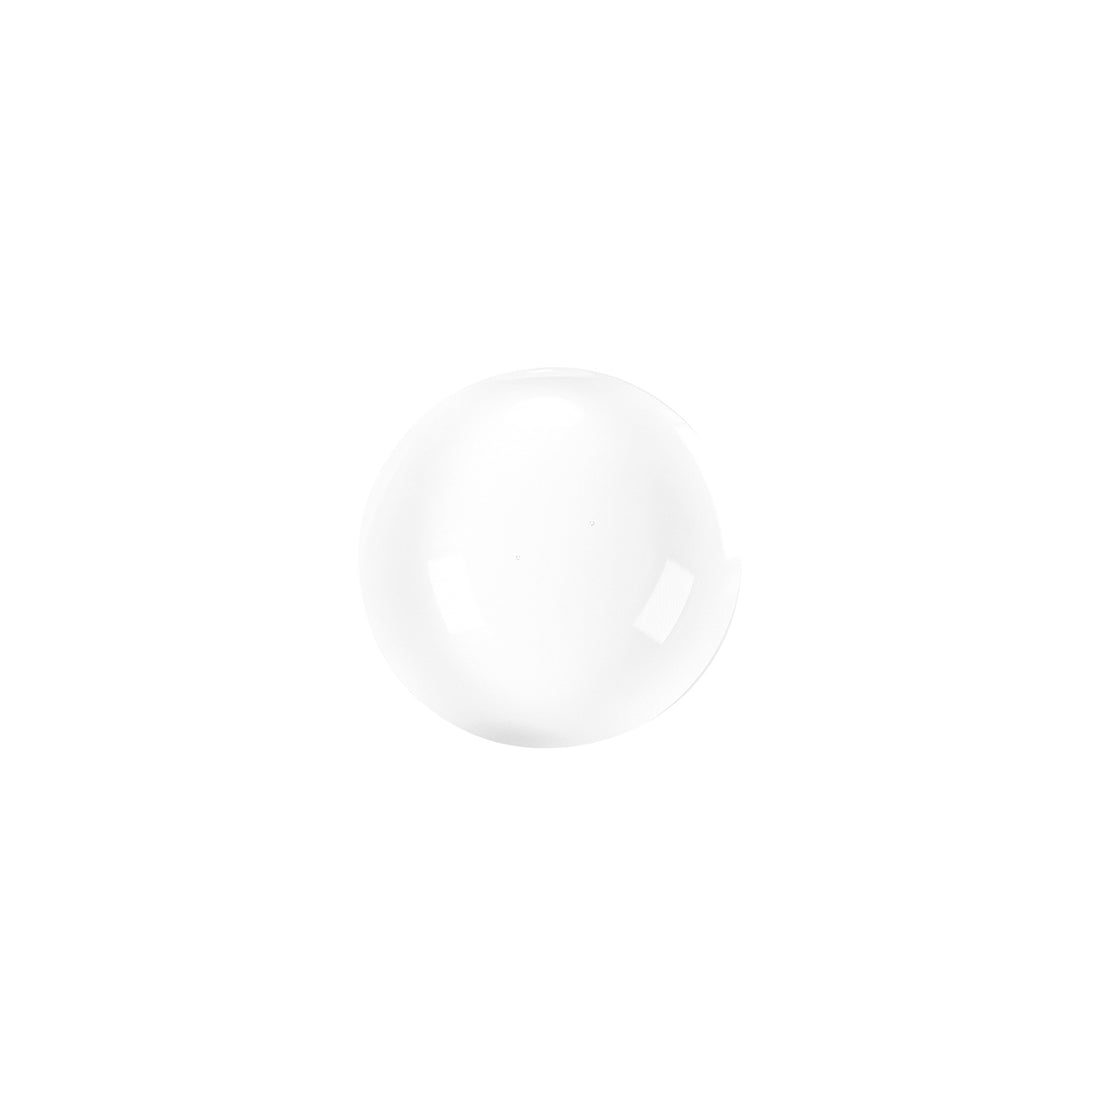 Phyto-C Hyper-White 15ml